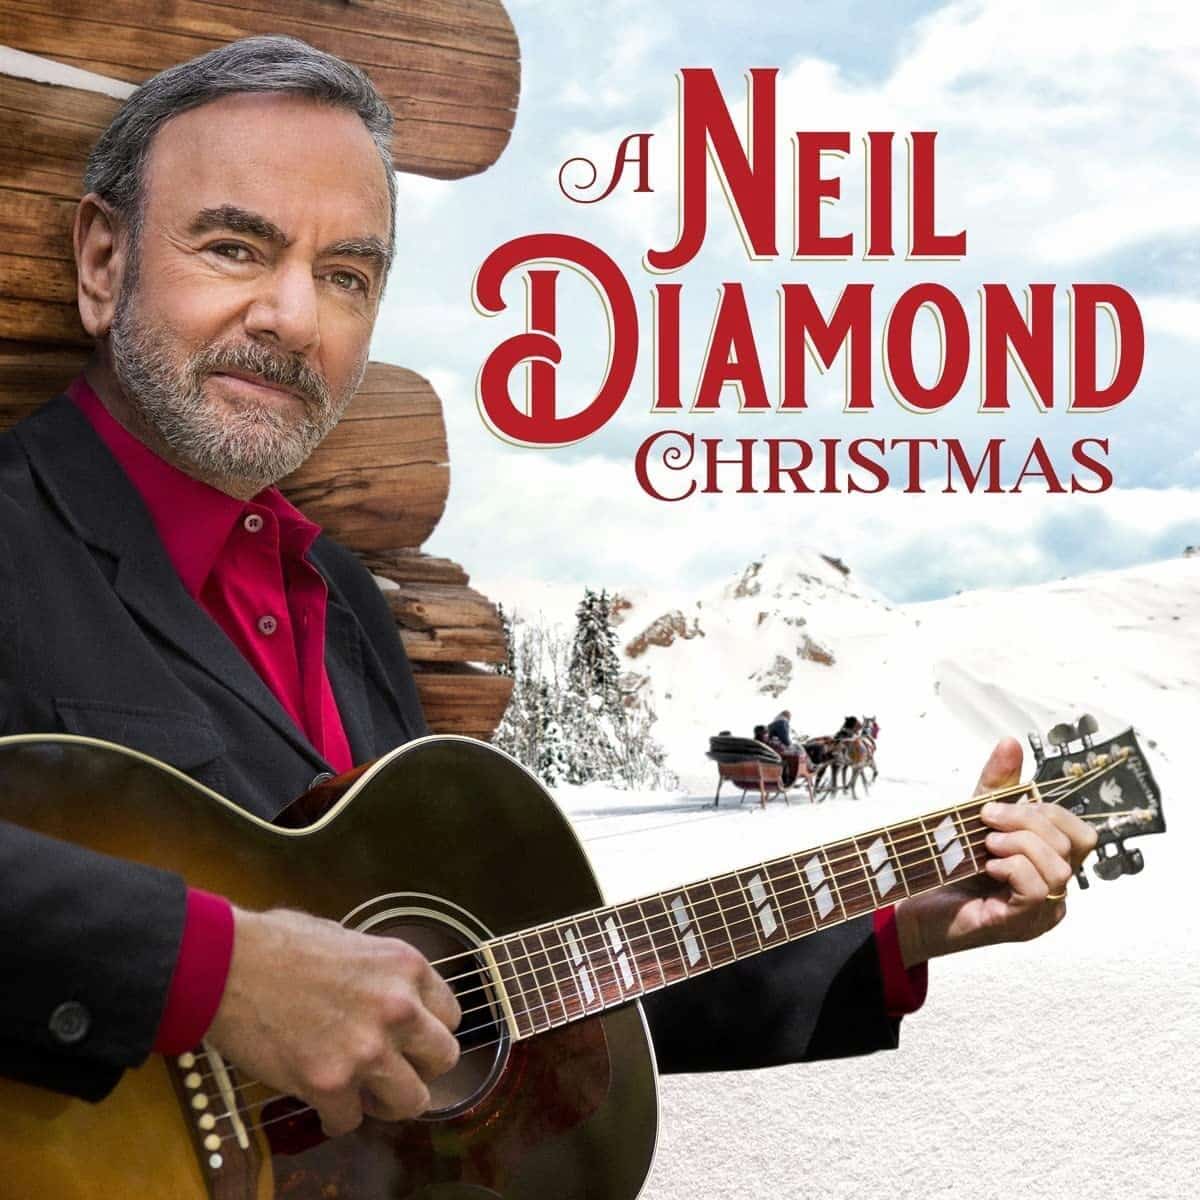 Neil Diamond “A Neil Diamond Christmas 2022